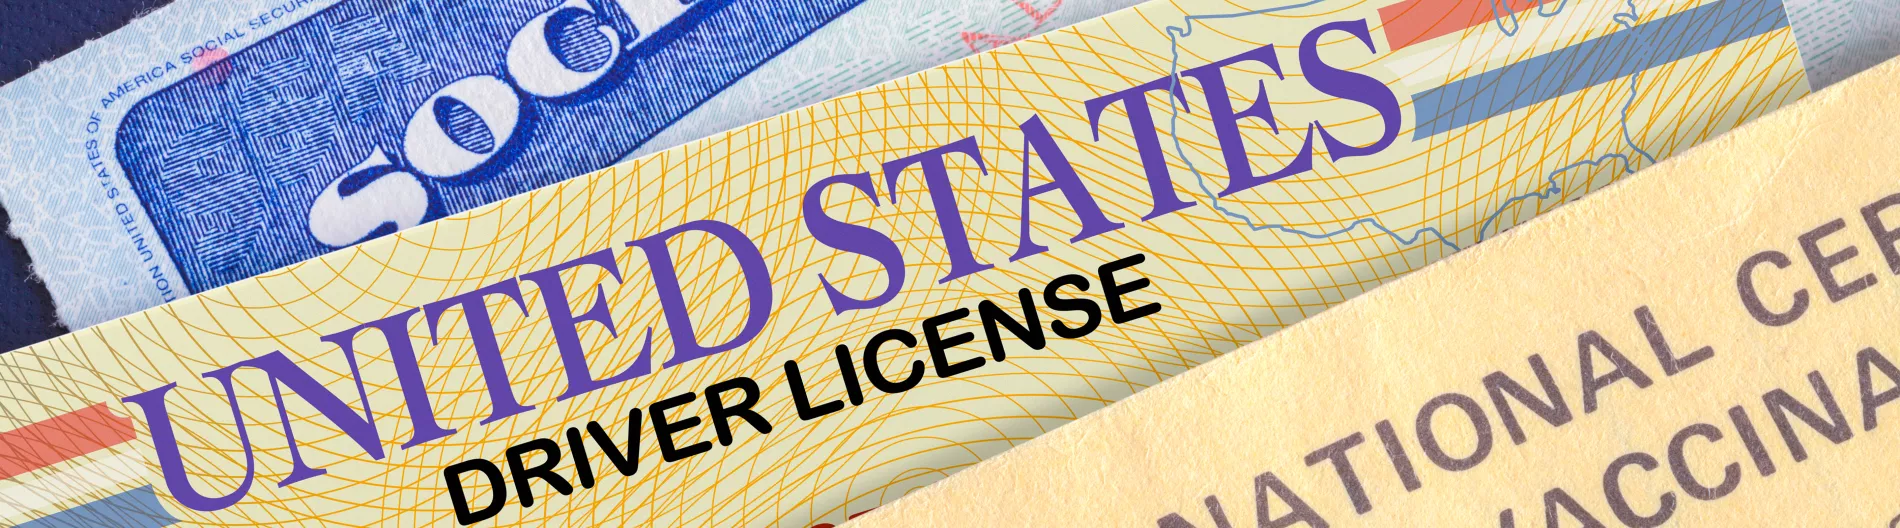 driver's license drivers passport,